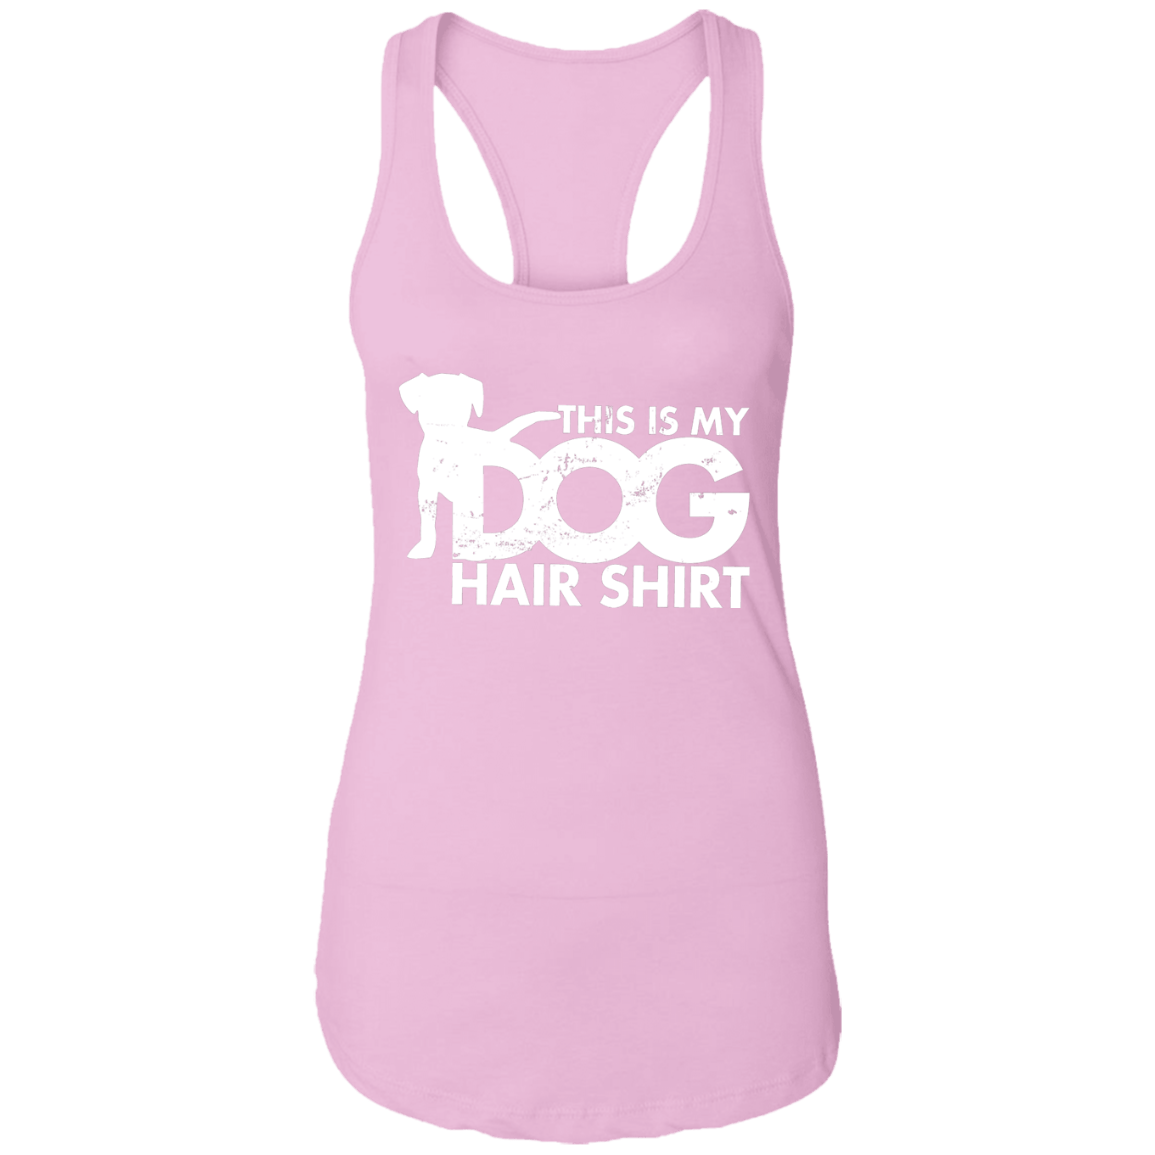 Dog Hair Shirt - Ladies Racer Back Tank.